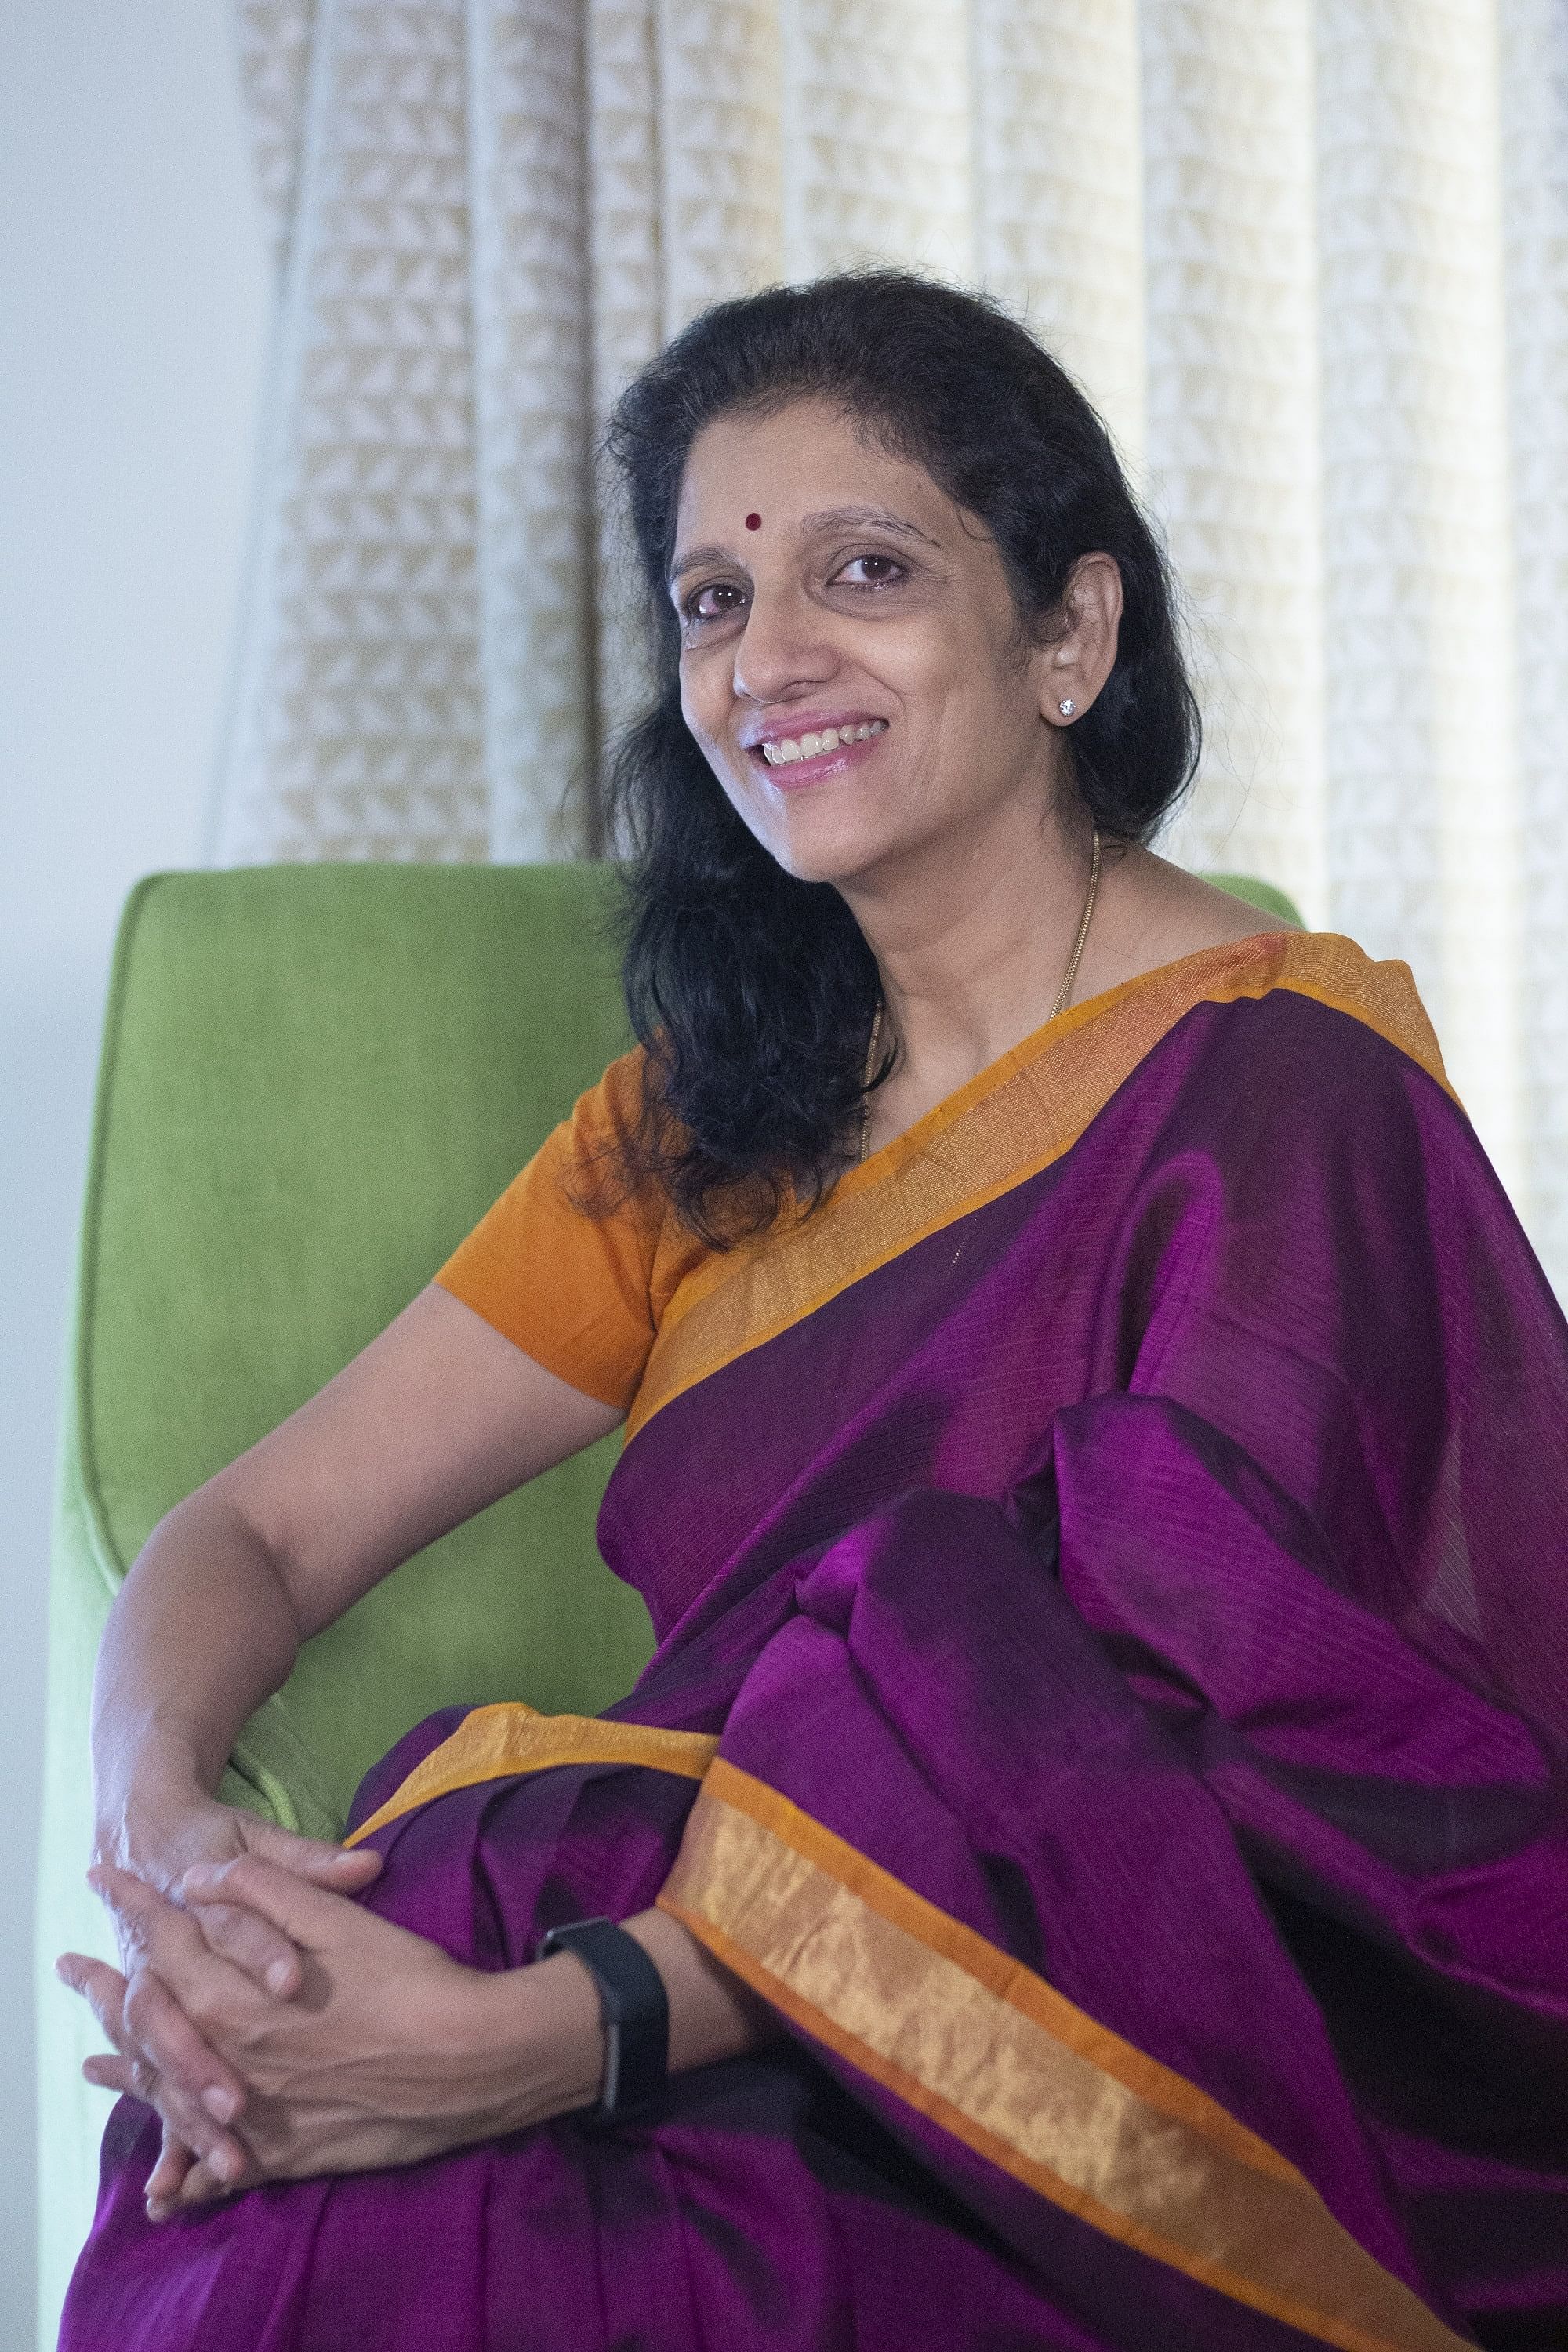 Meena Ganesh is the Managing Director & CEO at Portea Medical